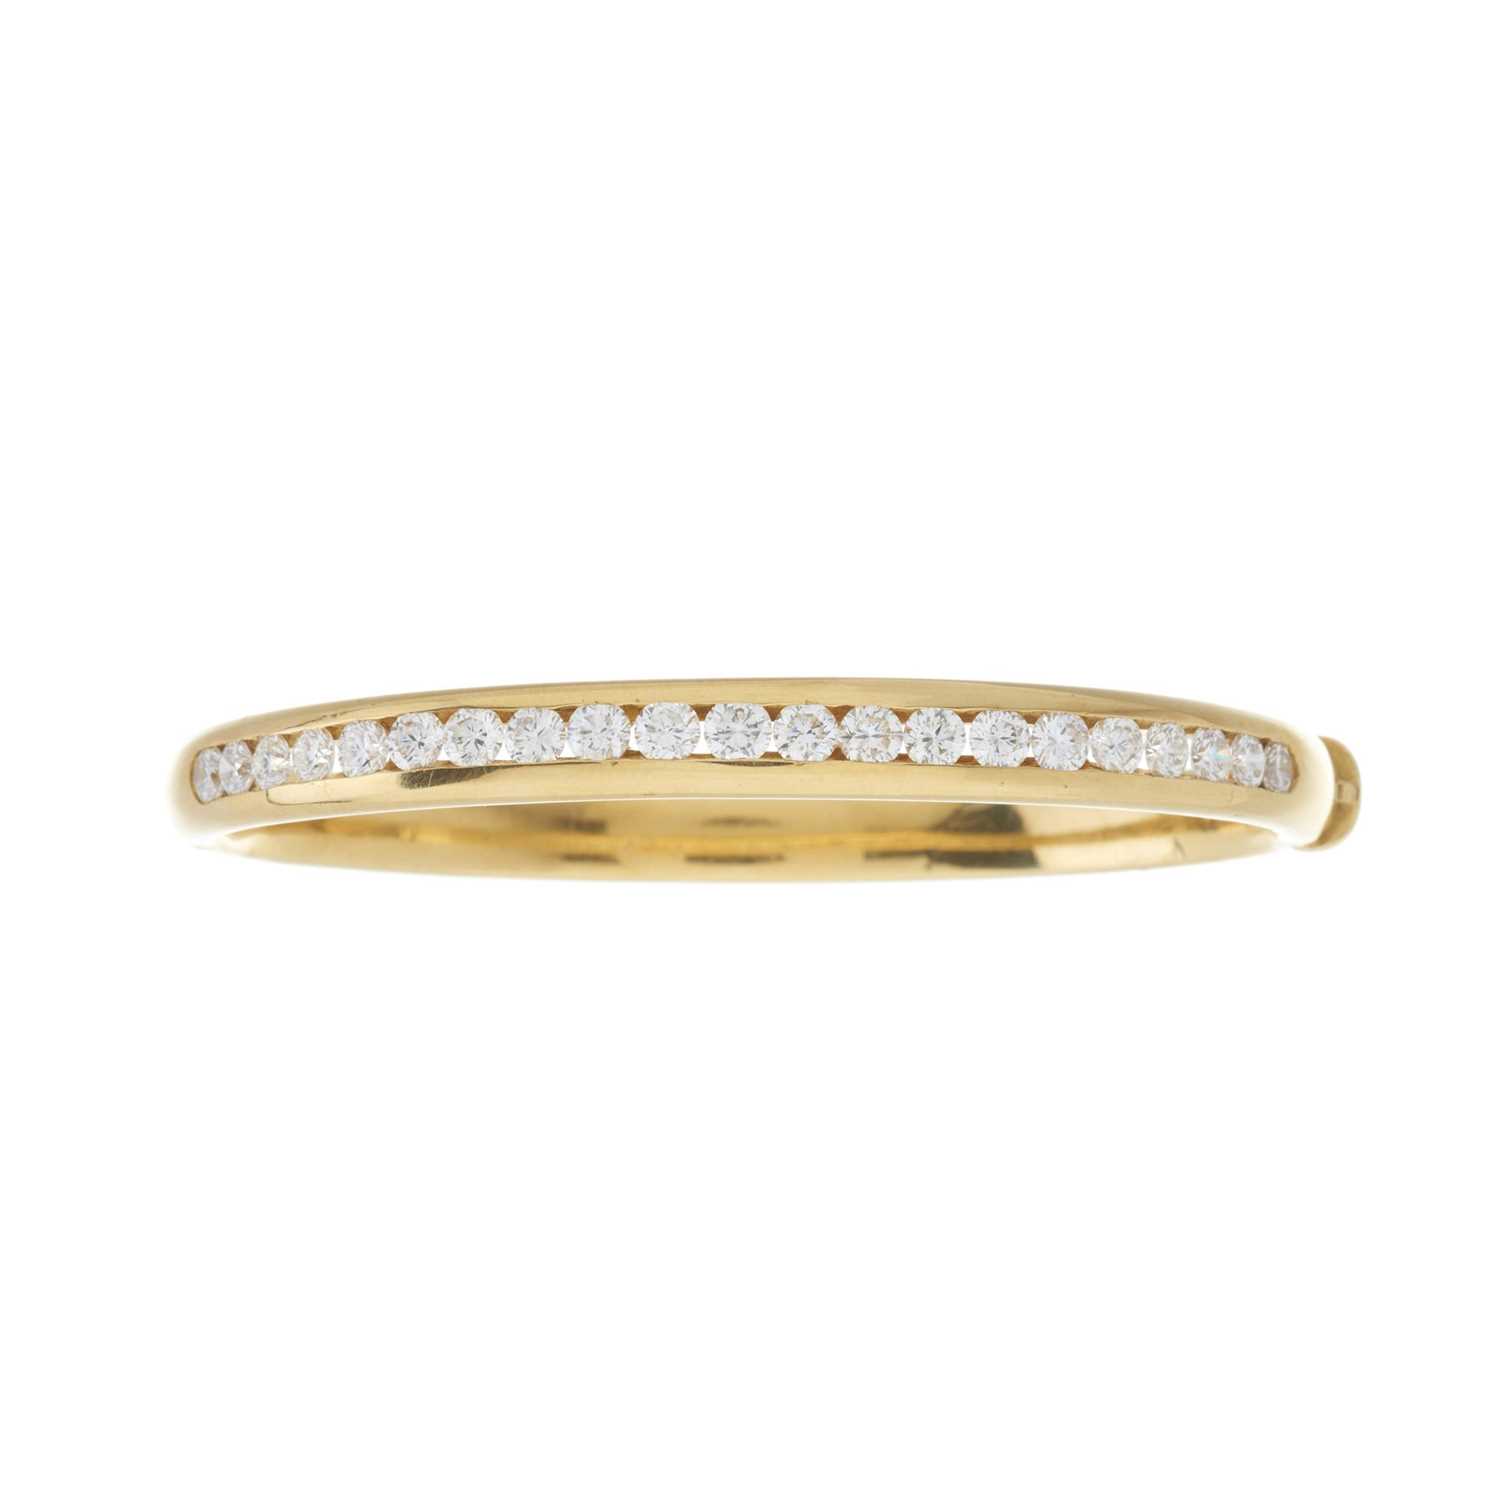 Lot 45 - An 18ct gold diamond line bangle bracelet